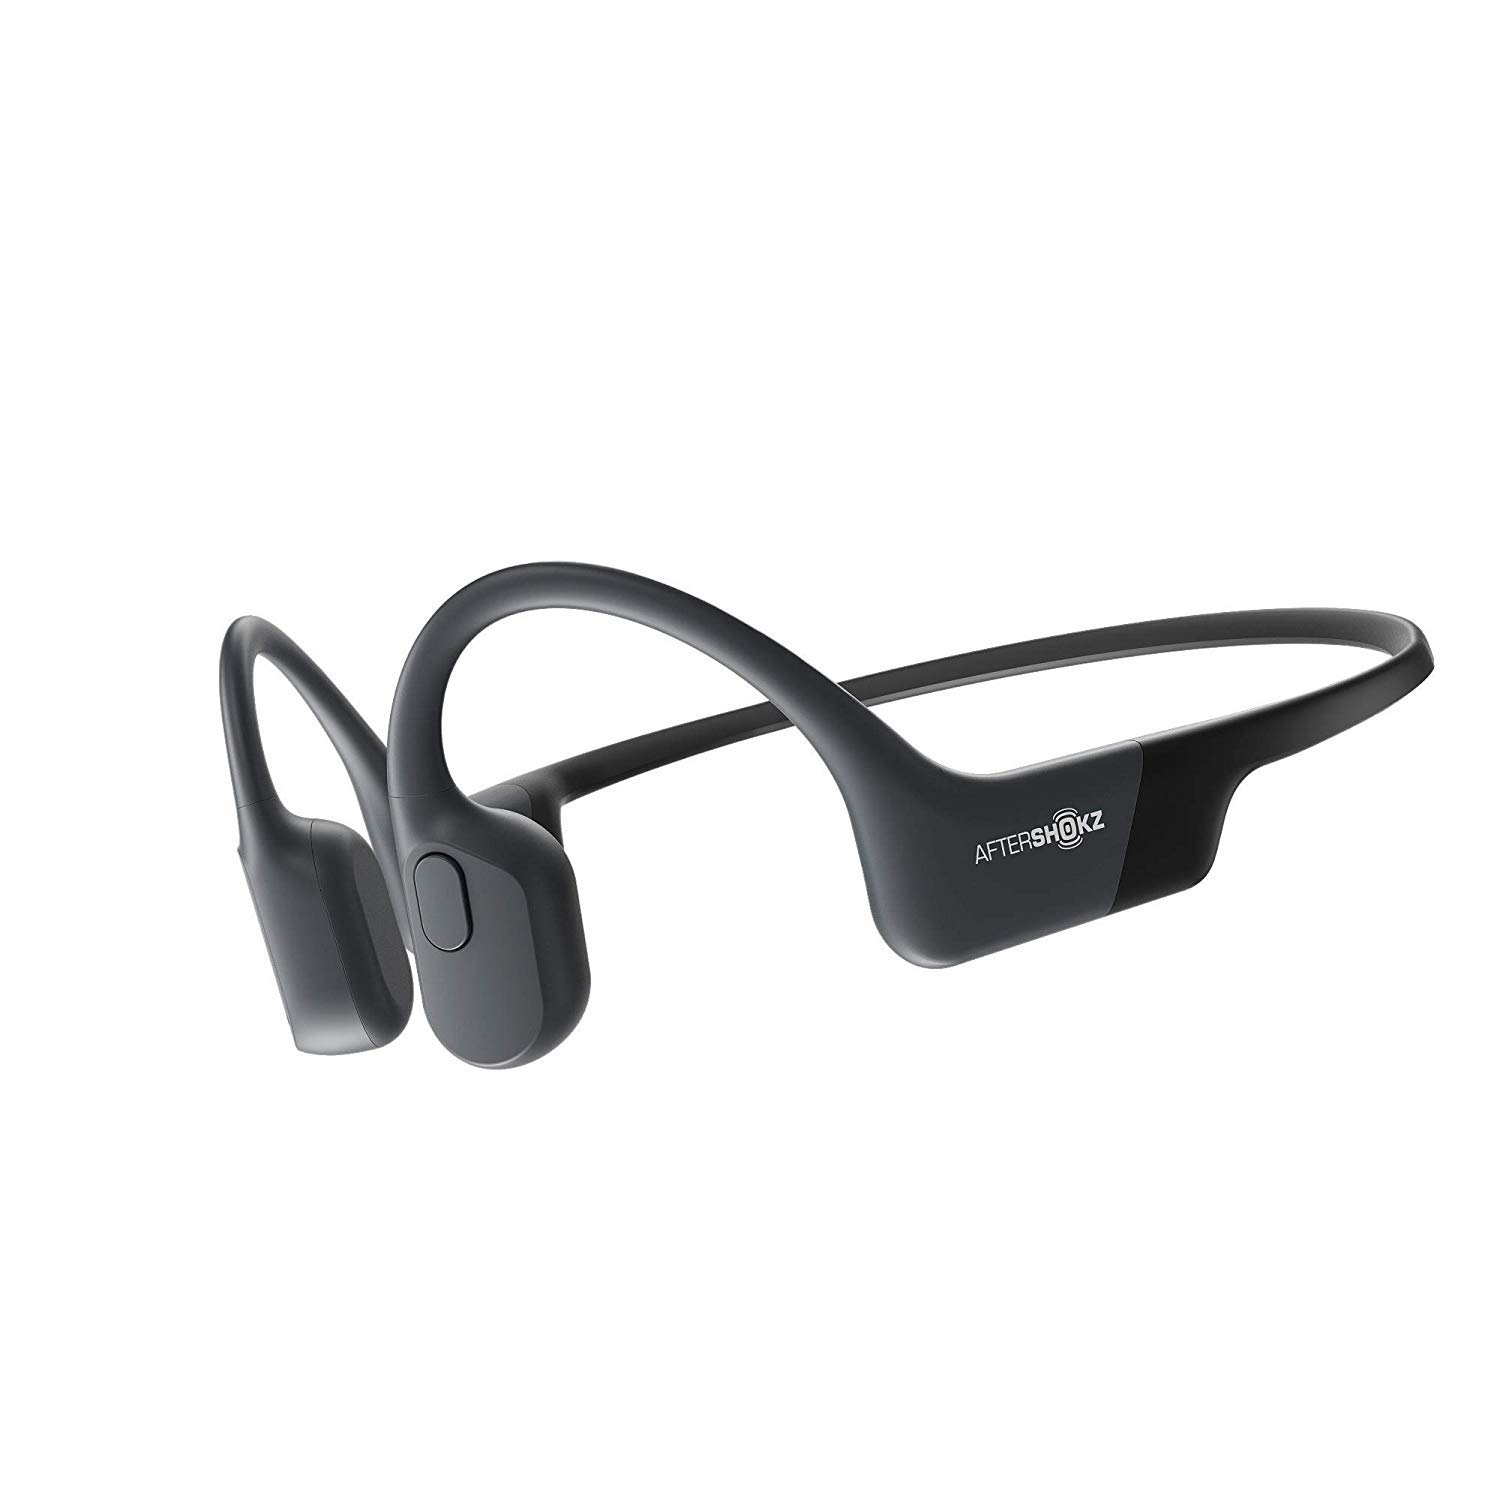 Aftershokz Aeropex - Open-Ear Bluetooth Bone Conduction Sport Headphones - Sweat Resistant Wireless Earphones for Workouts and Running - Built-in Mic - with Sport Belt